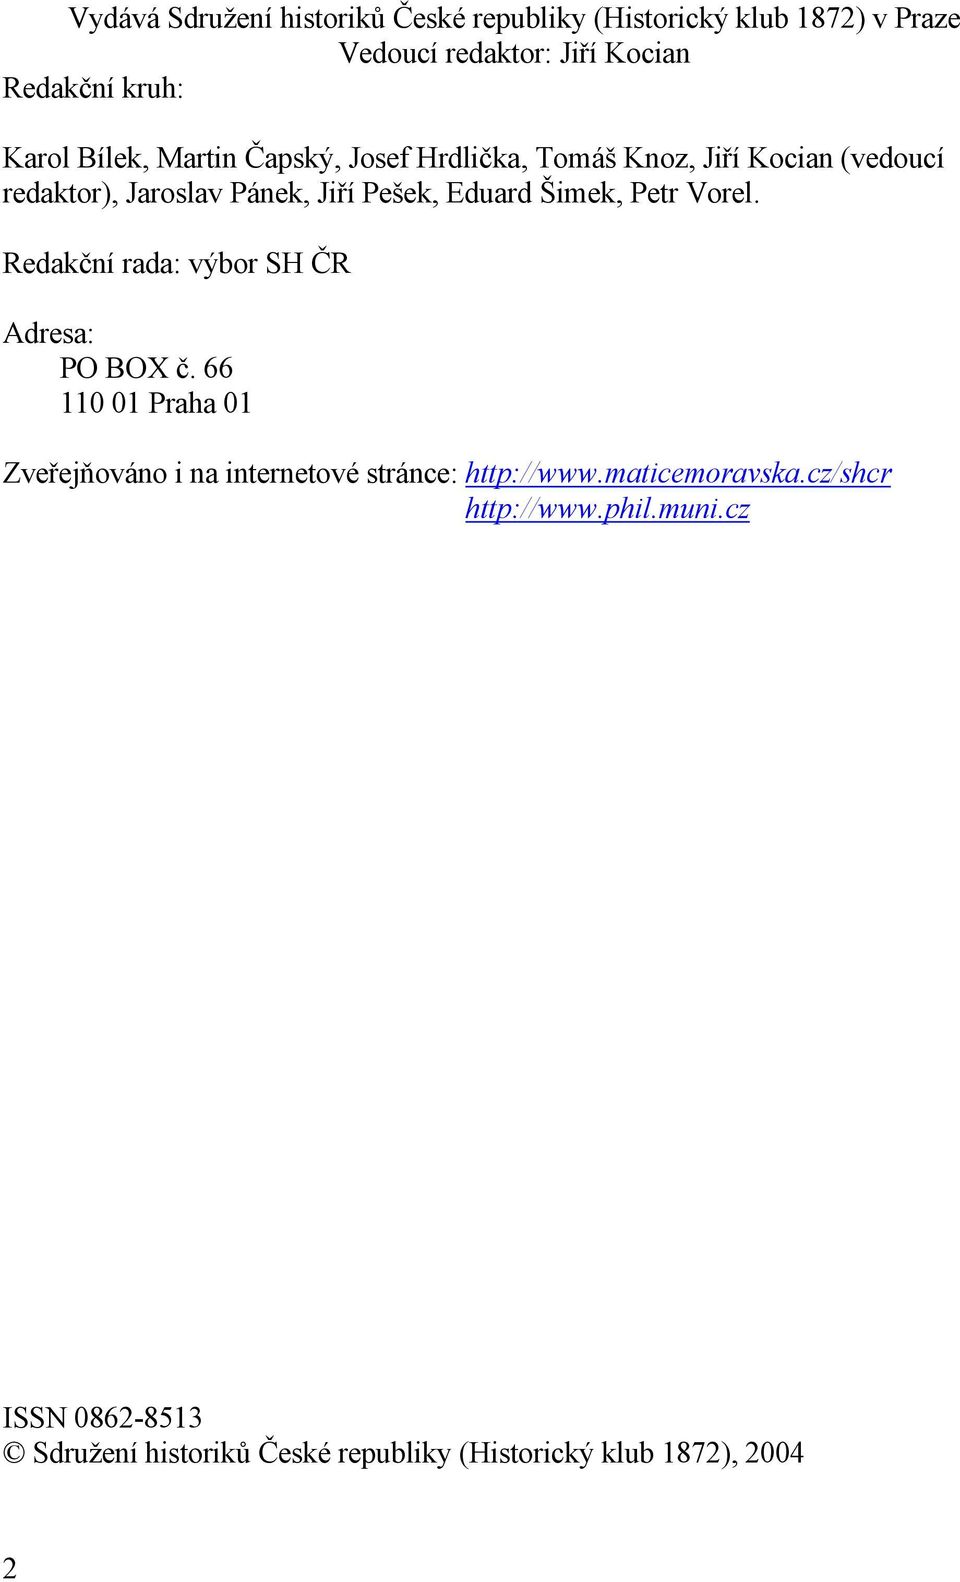 Petr Vorel. Redakční rada: výbor SH ČR Adresa: PO BOX č. 66 110 01 Praha 01 Zveřejňováno i na internetové stránce: http://www.